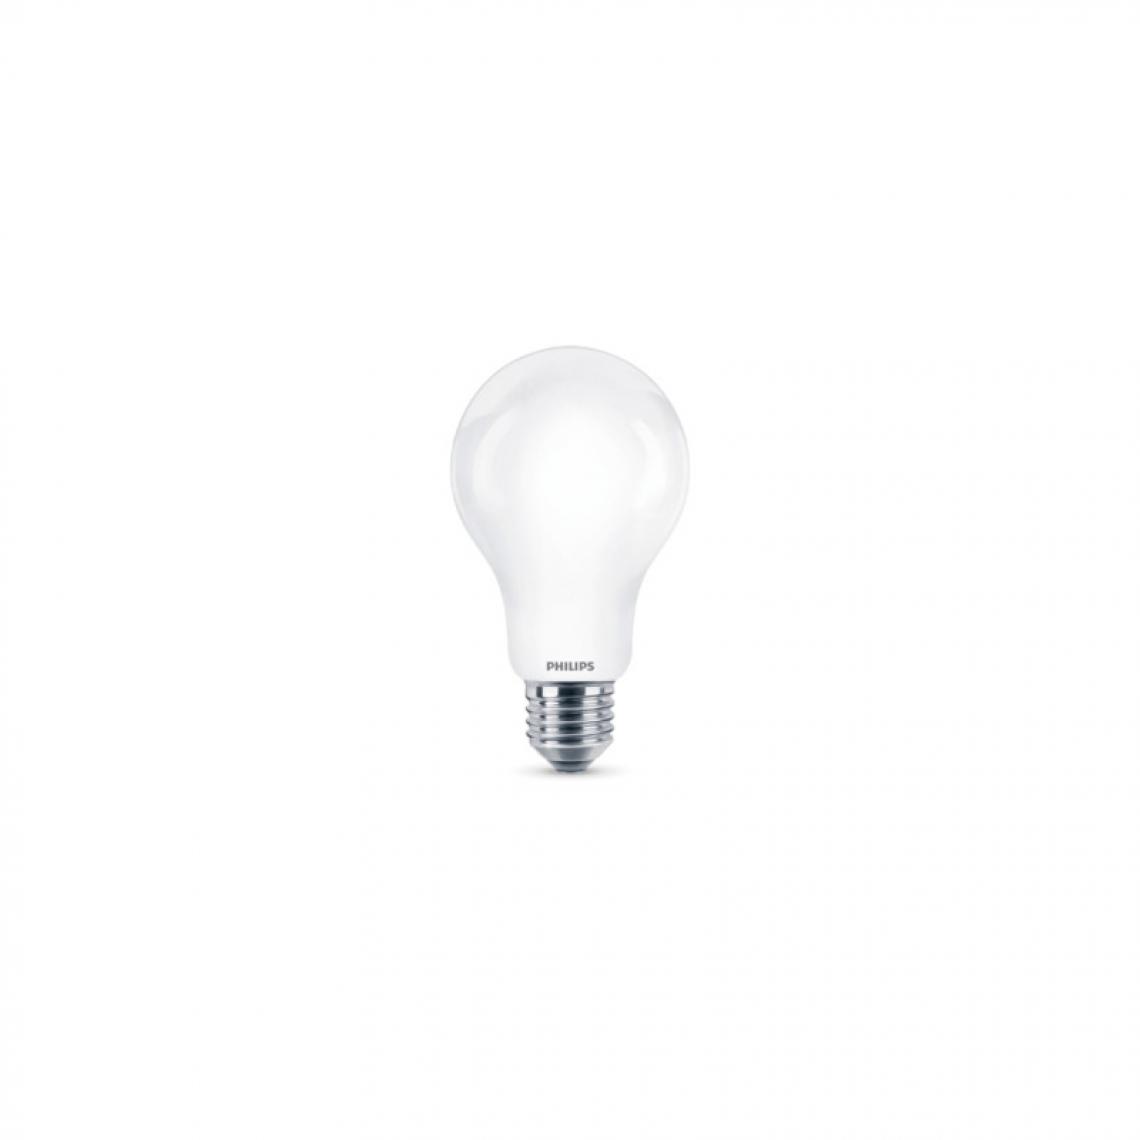 Philips - Ampoule LED standard PHILIPS - EyeComfort - 13W - 2000 lumens - 2700K - E27 - 93003 - Ampoules LED